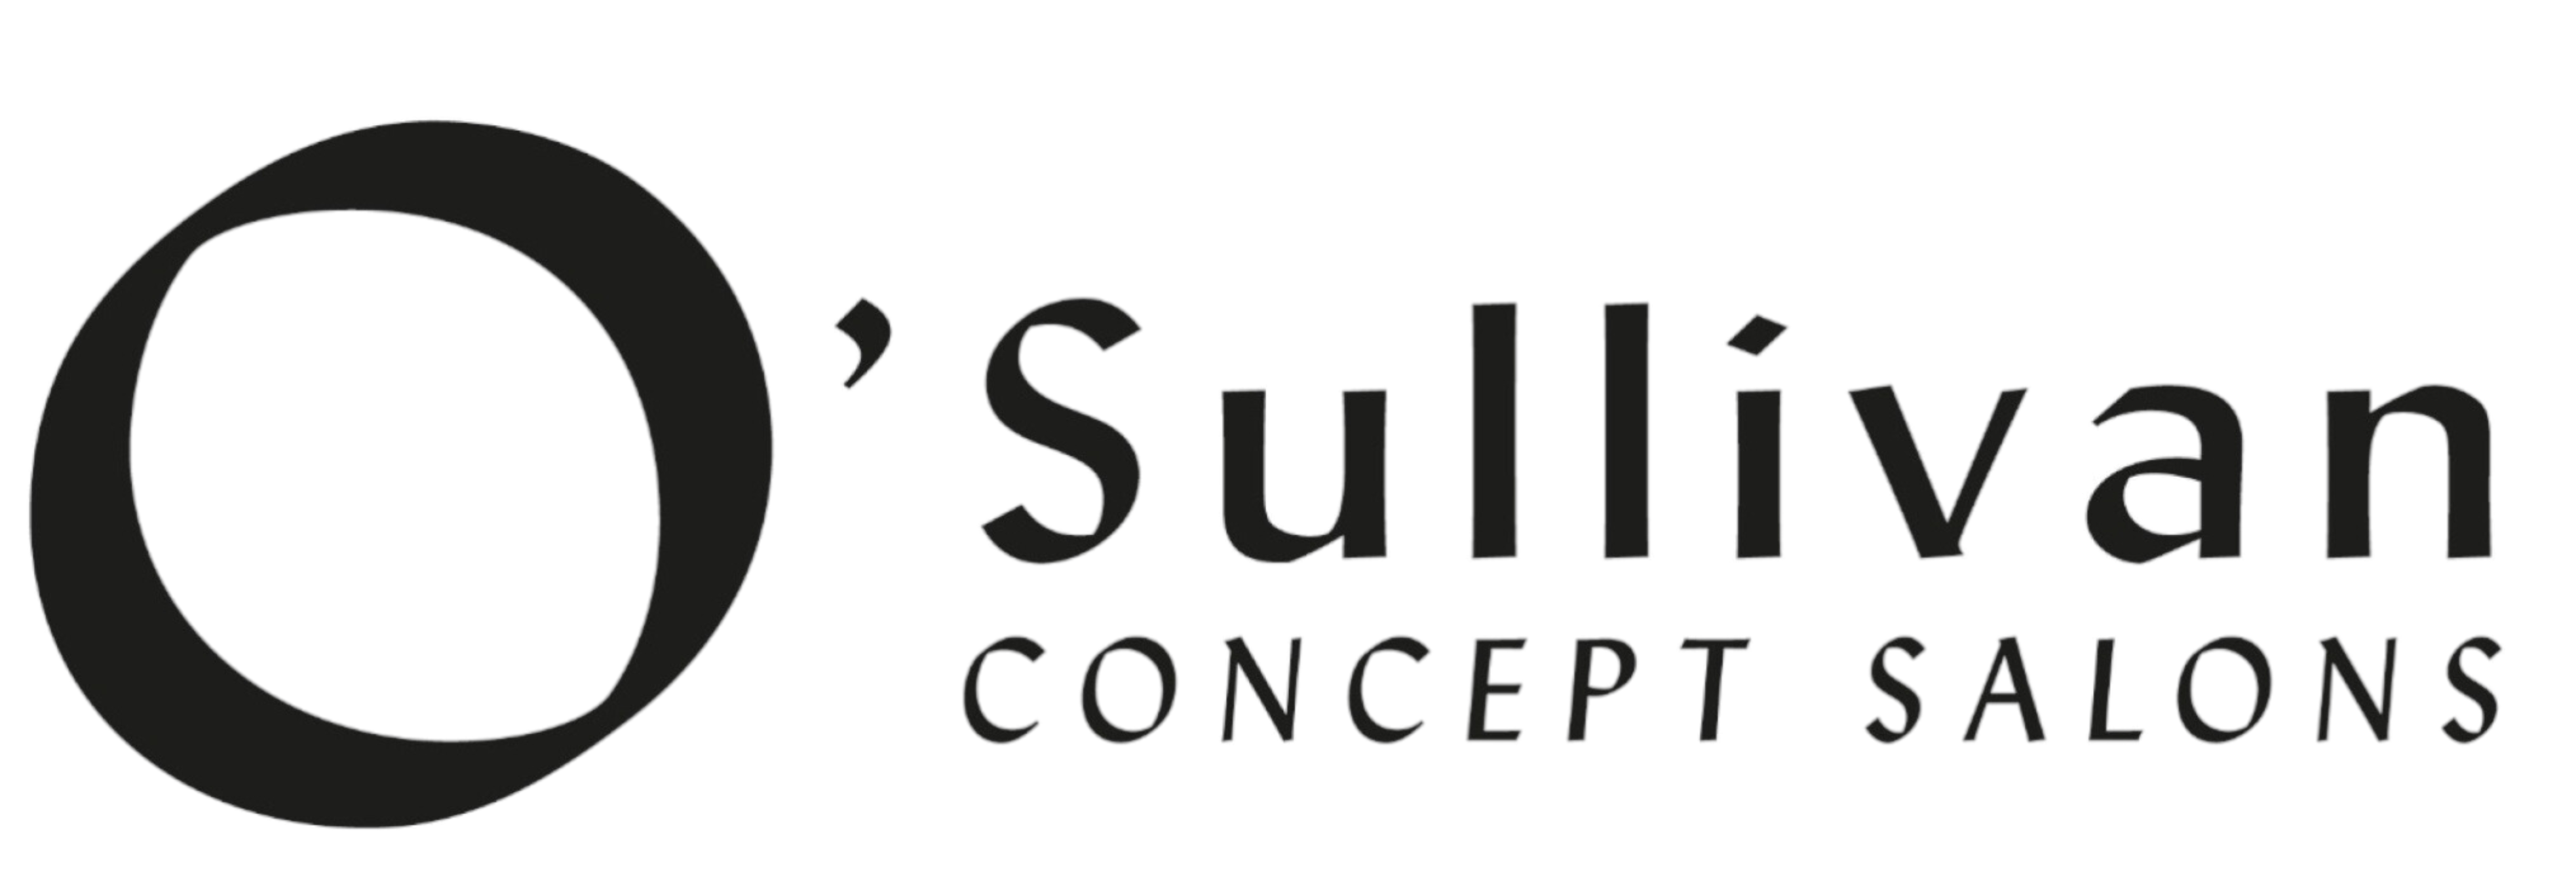 O'Sullivan concept salons logo